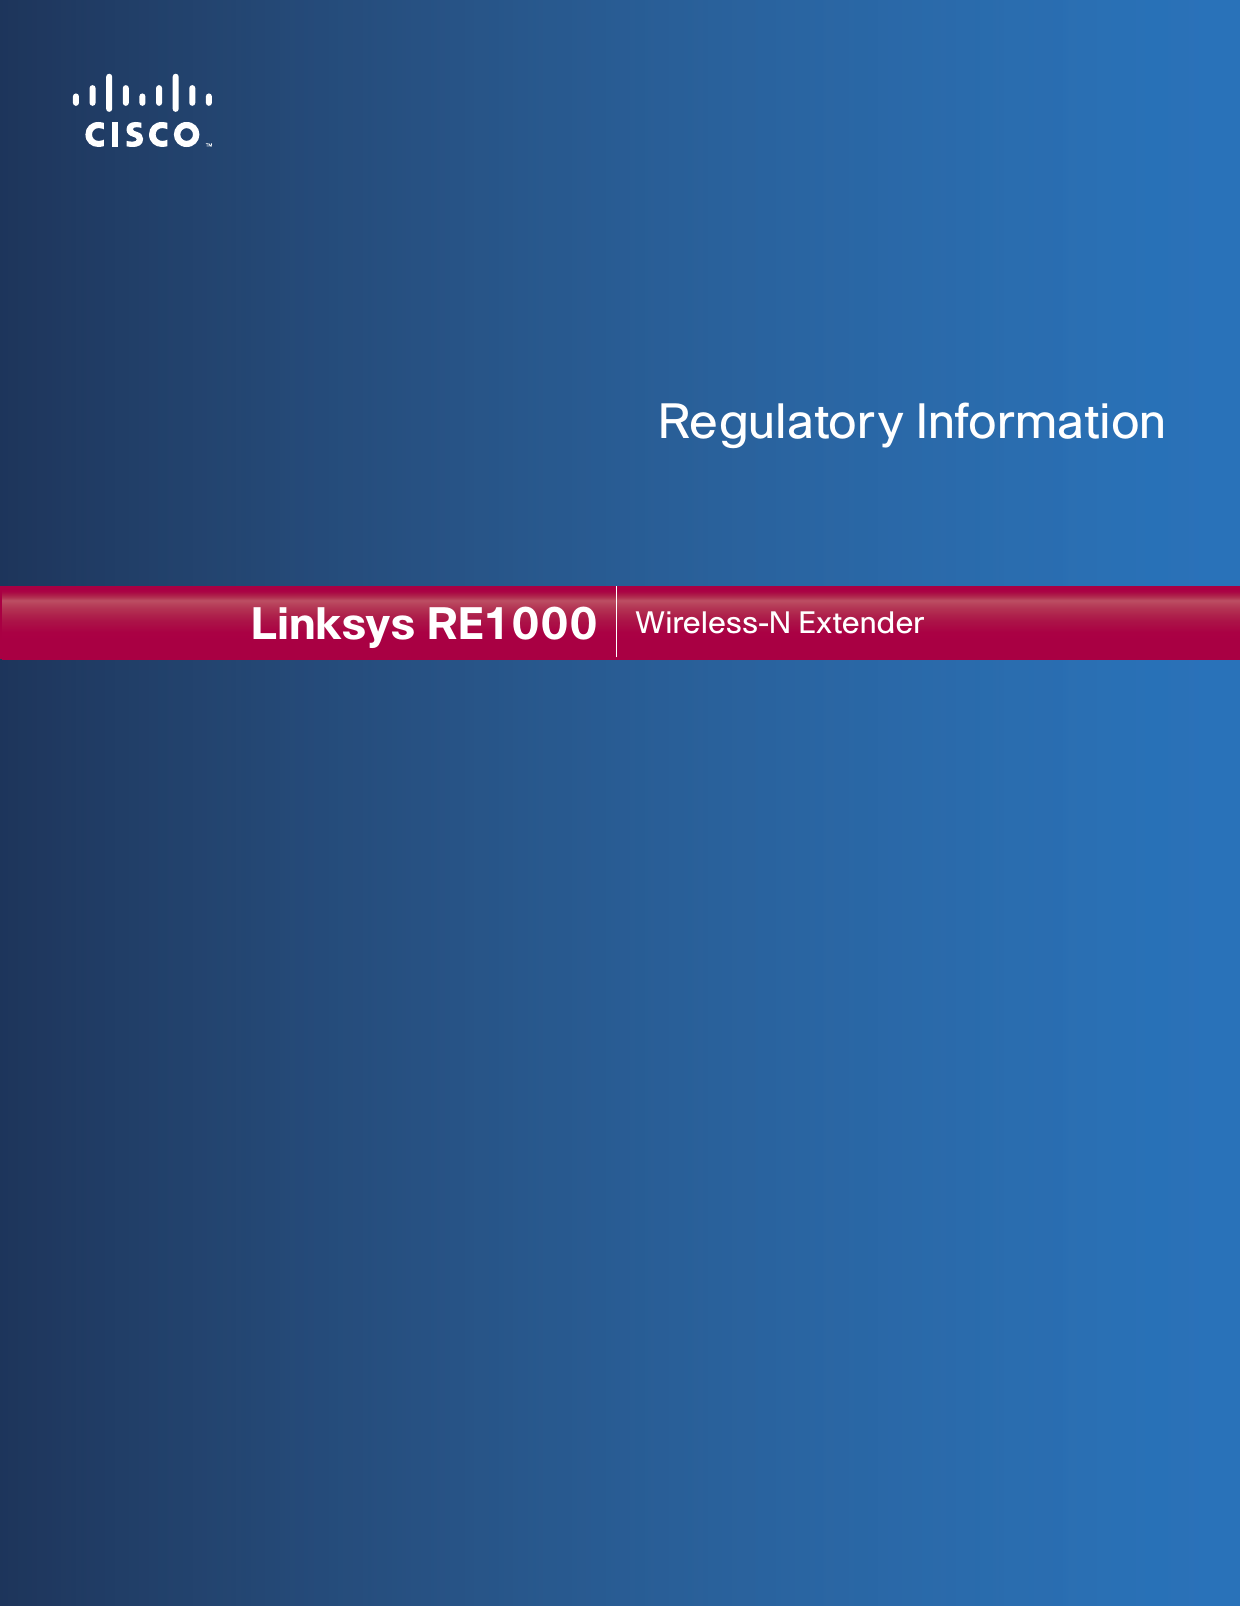 Linksys E3000 High Performance Wireless-N RouterSupplemental InformationLinksys RE1000  Wireless-N ExtenderRegulatory Information